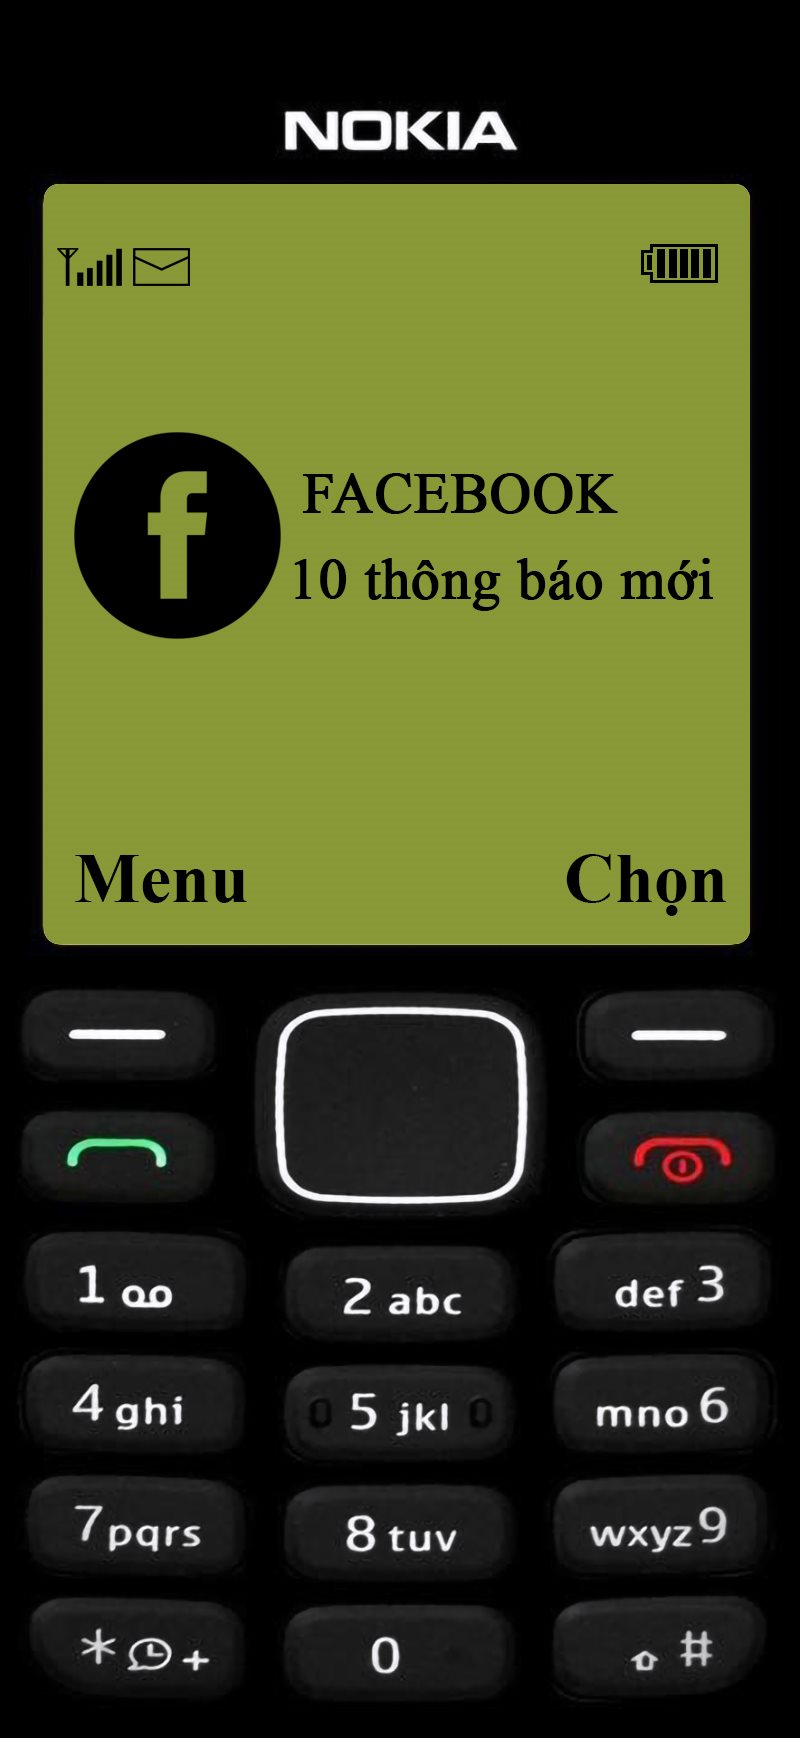 b12-hinh-nen-nokia-1280-cho-samsung-oppo-tren-iphone-anh-nen-nokia-1280-danh-cho-smartphone-dien-thoai-cam-ung.jpg